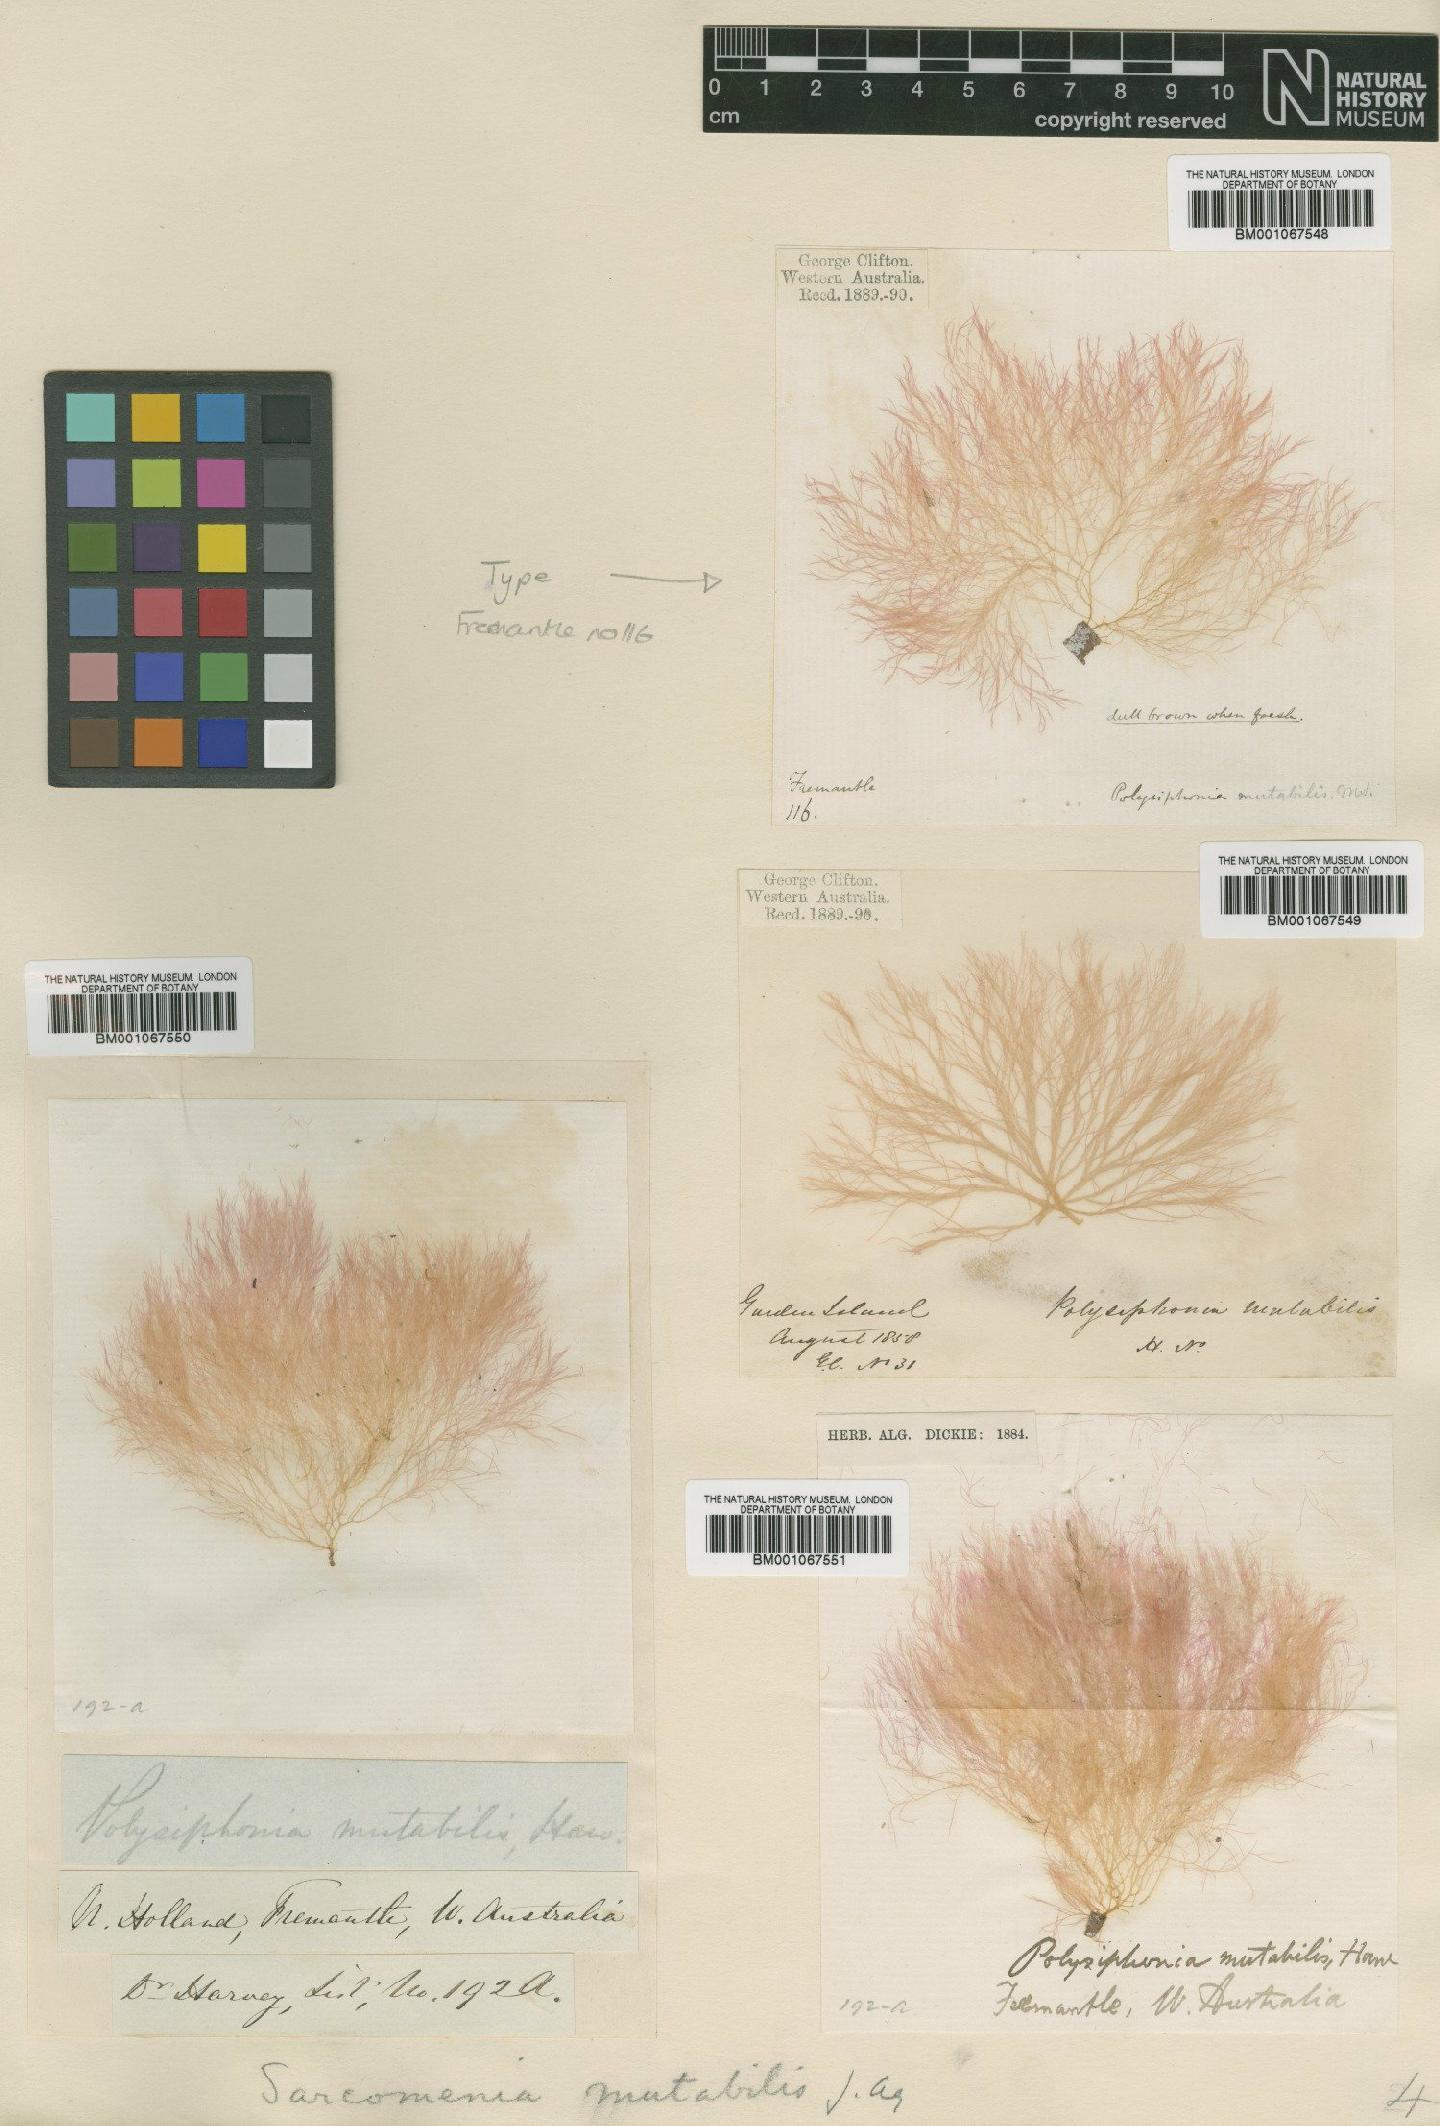 To NHMUK collection (Platysiphonia mutabilis (Harv.) Womersley & Shepley; NHMUK:ecatalogue:2301643)